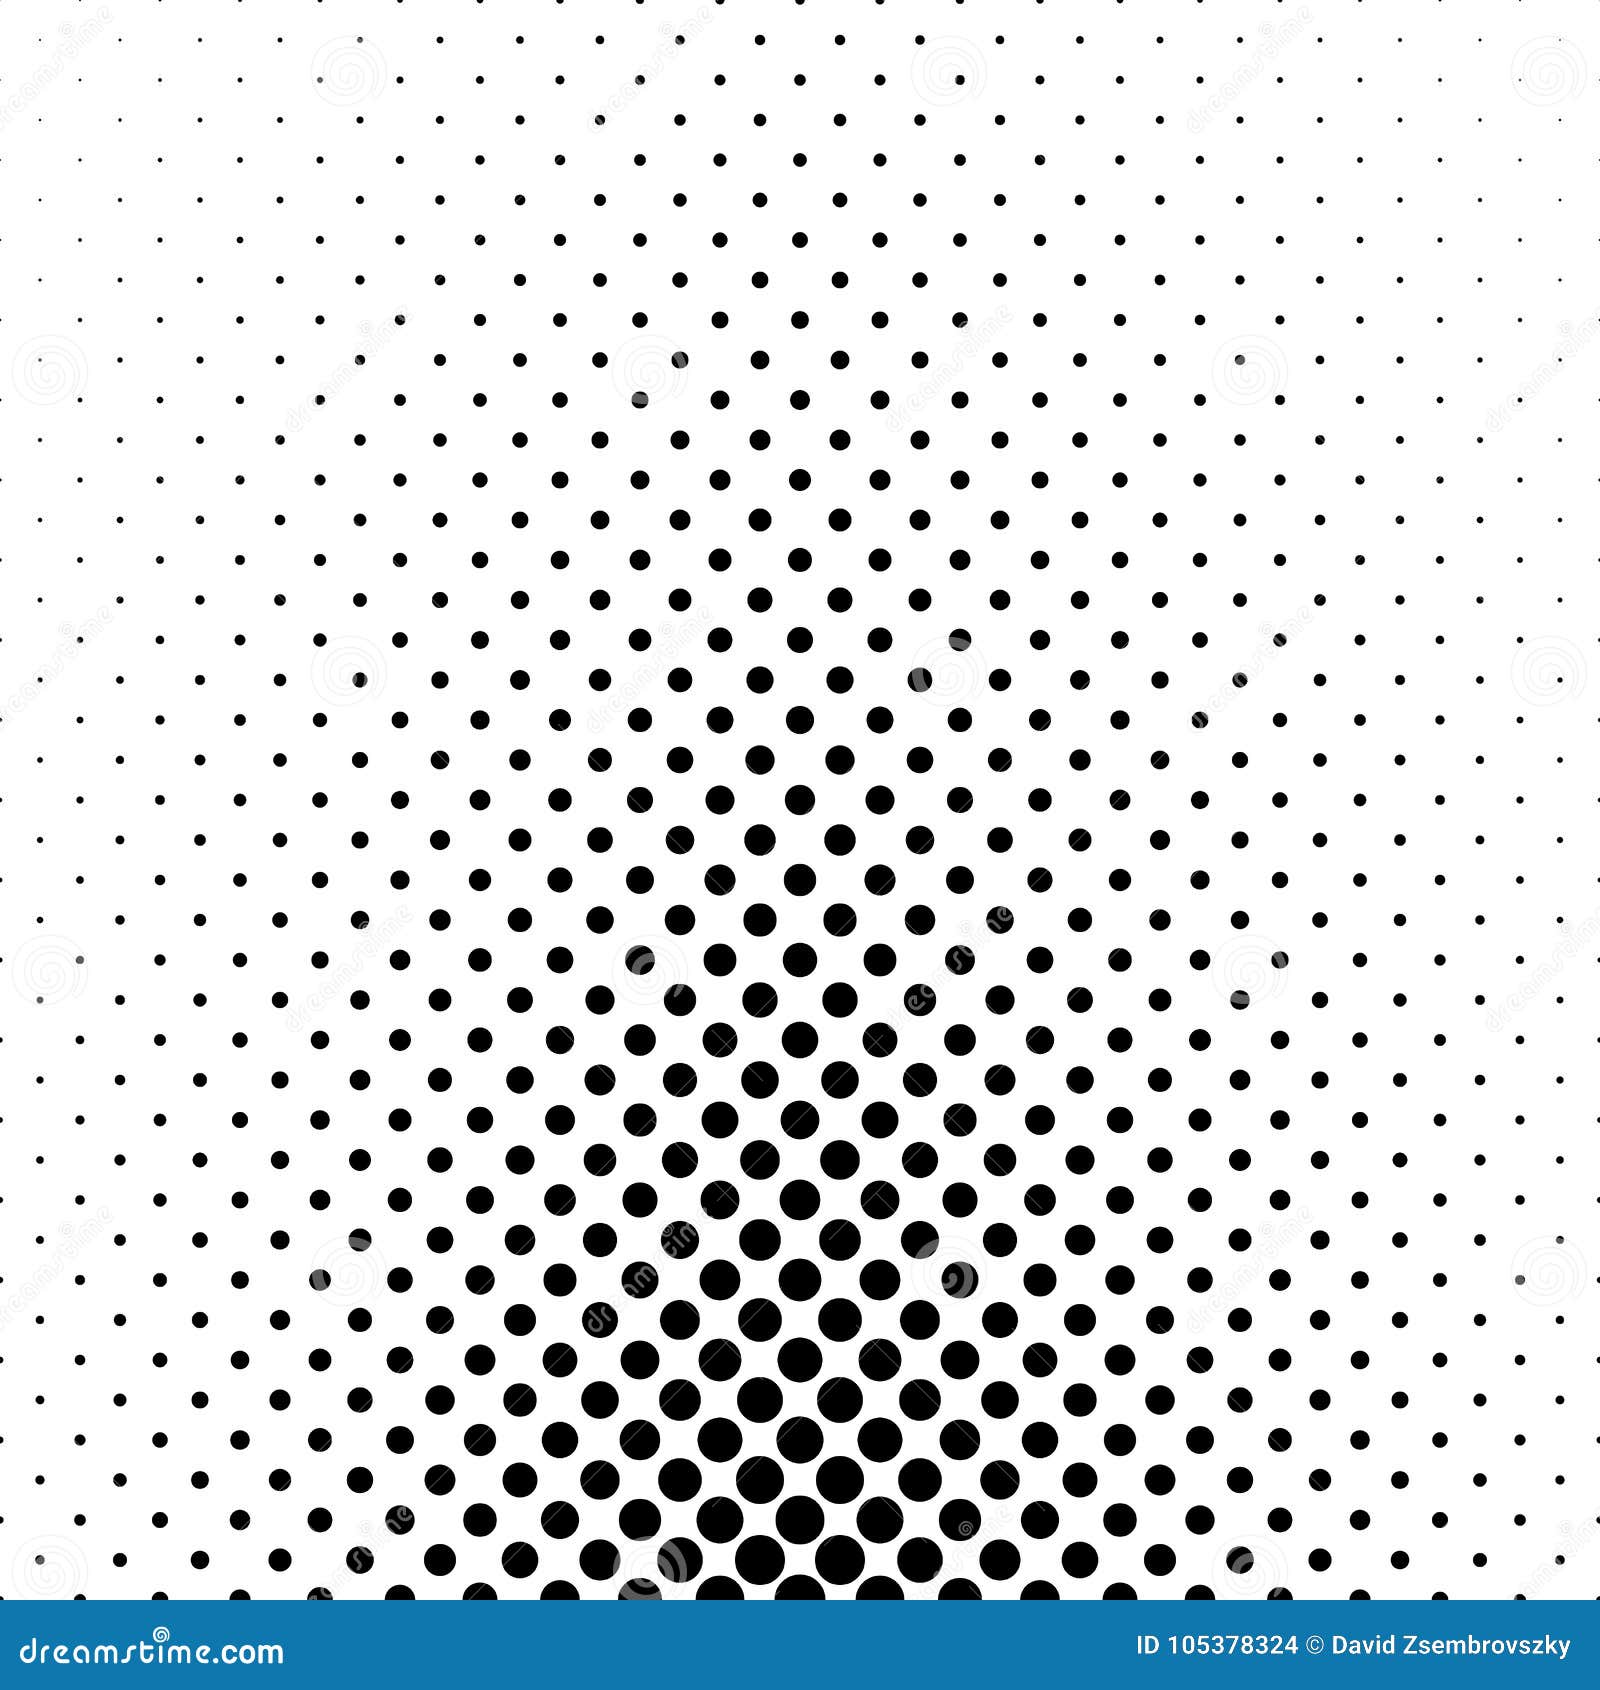 abstract monochrome polka dot pattern - geometric  background 